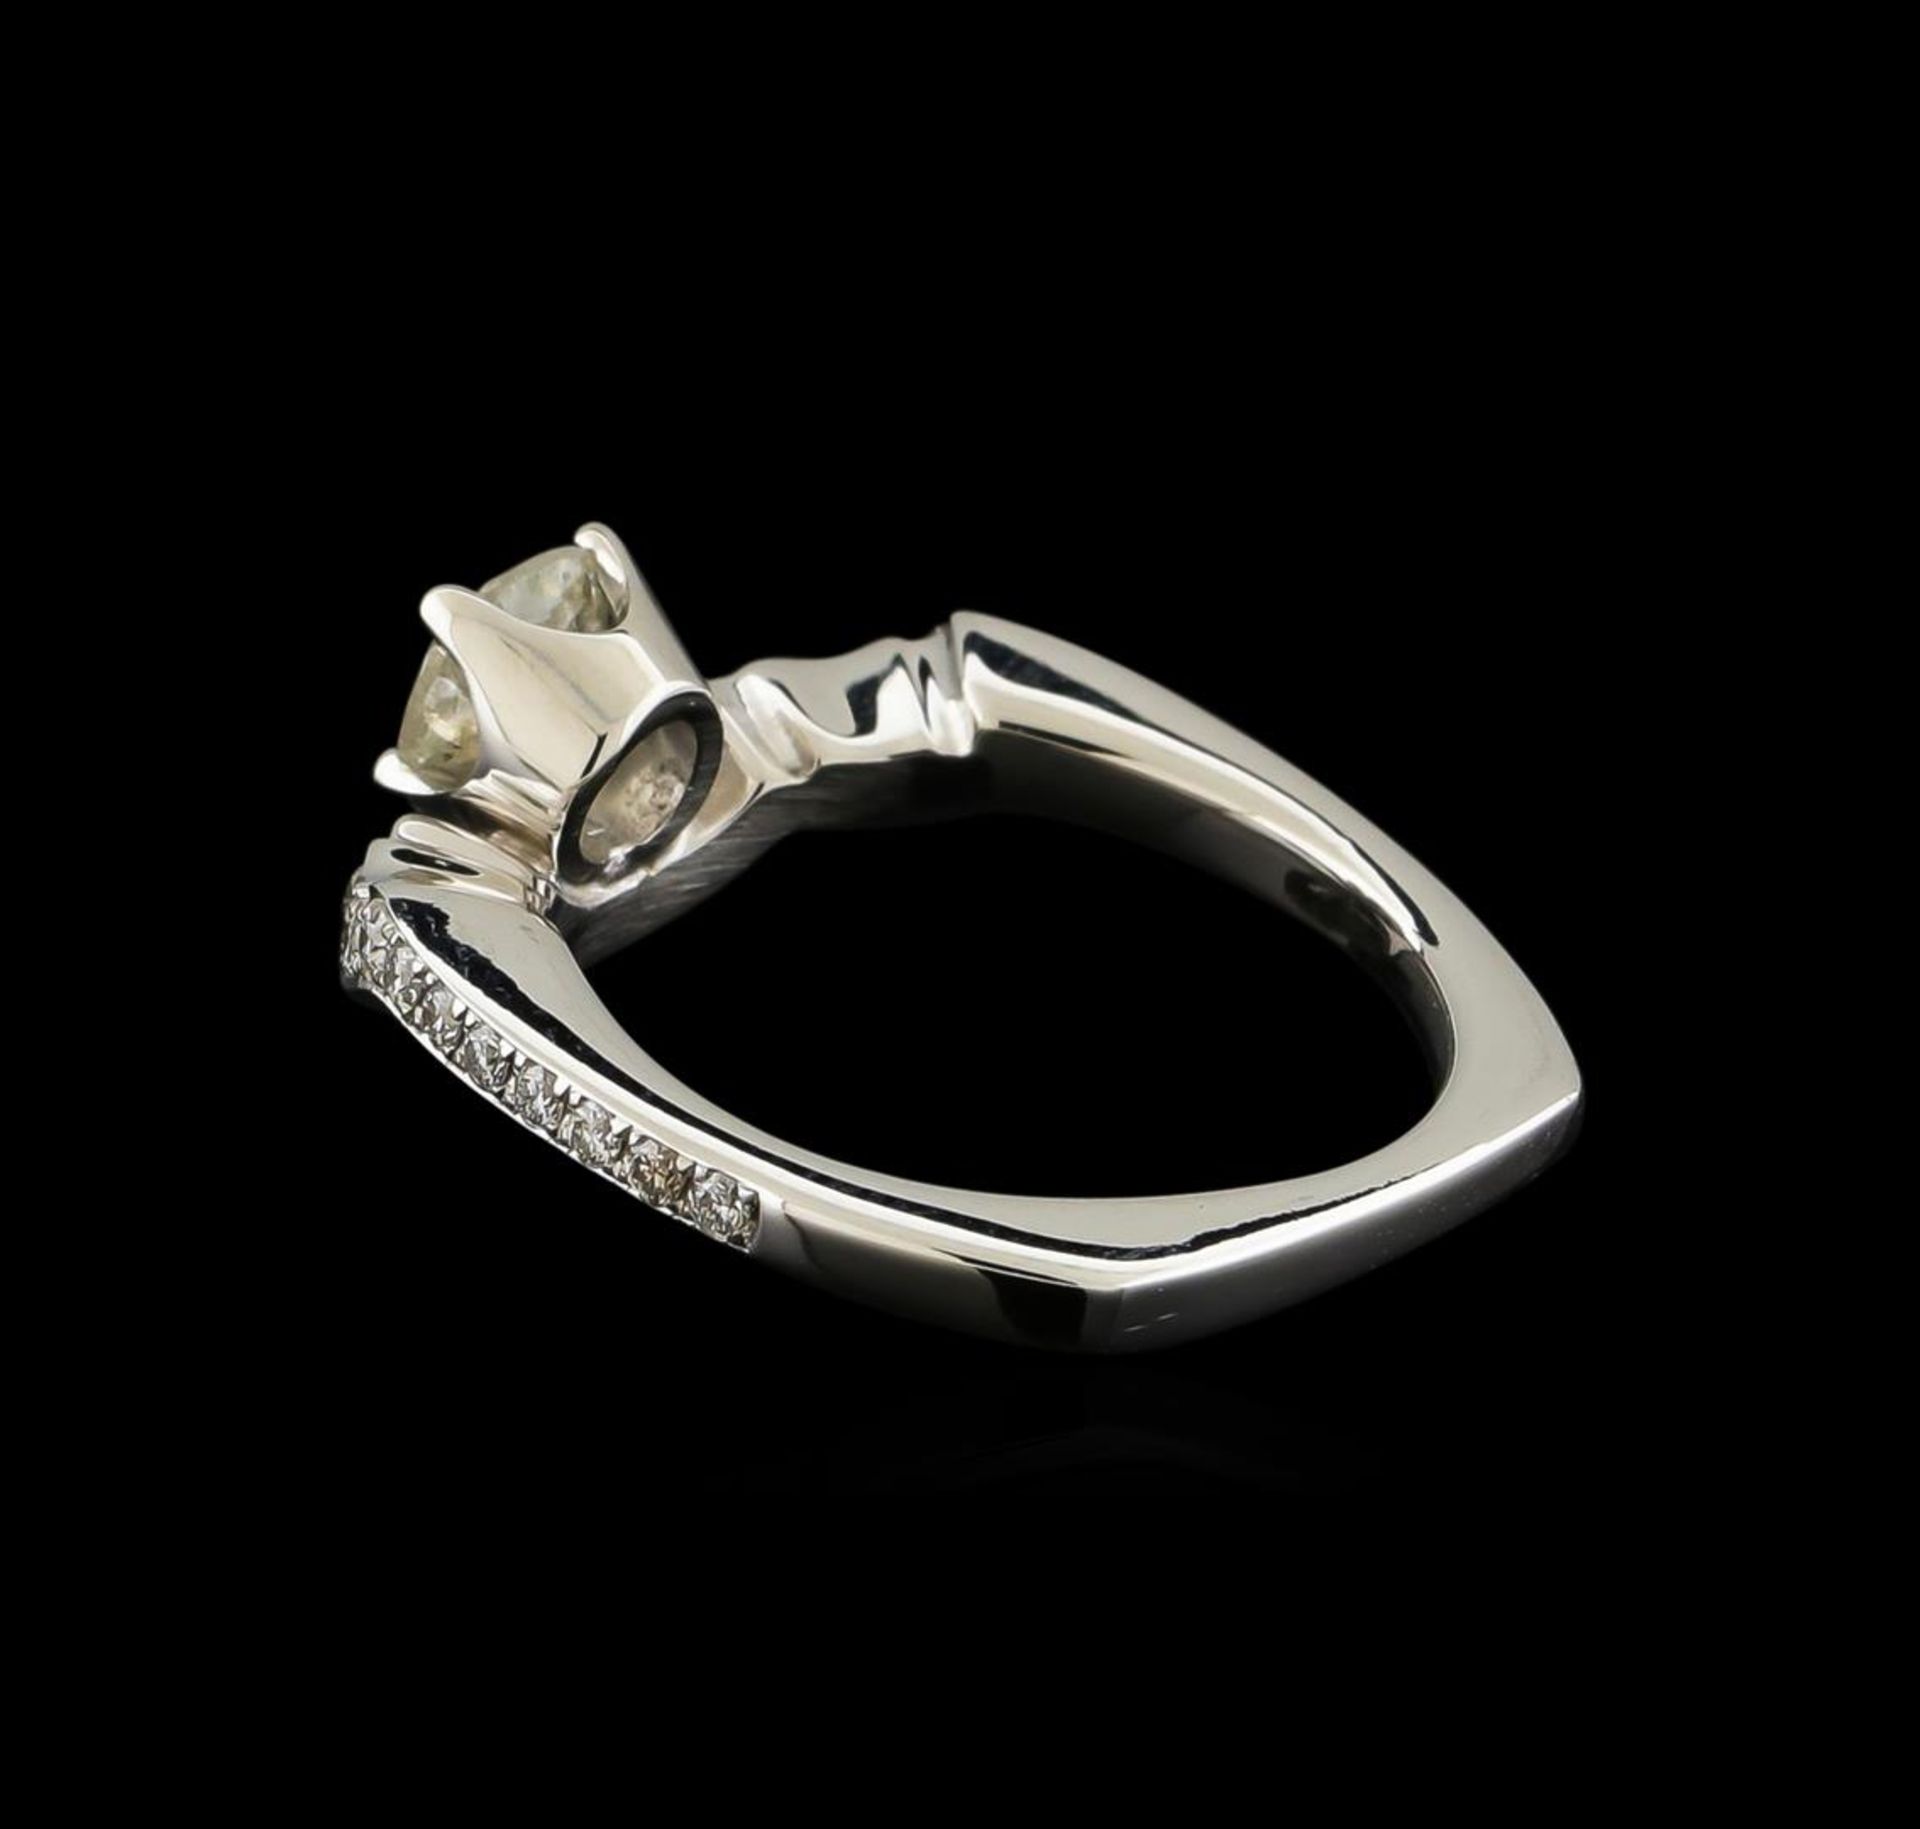 0.70 ctw Diamond Ring - 14KT White Gold - Image 3 of 4